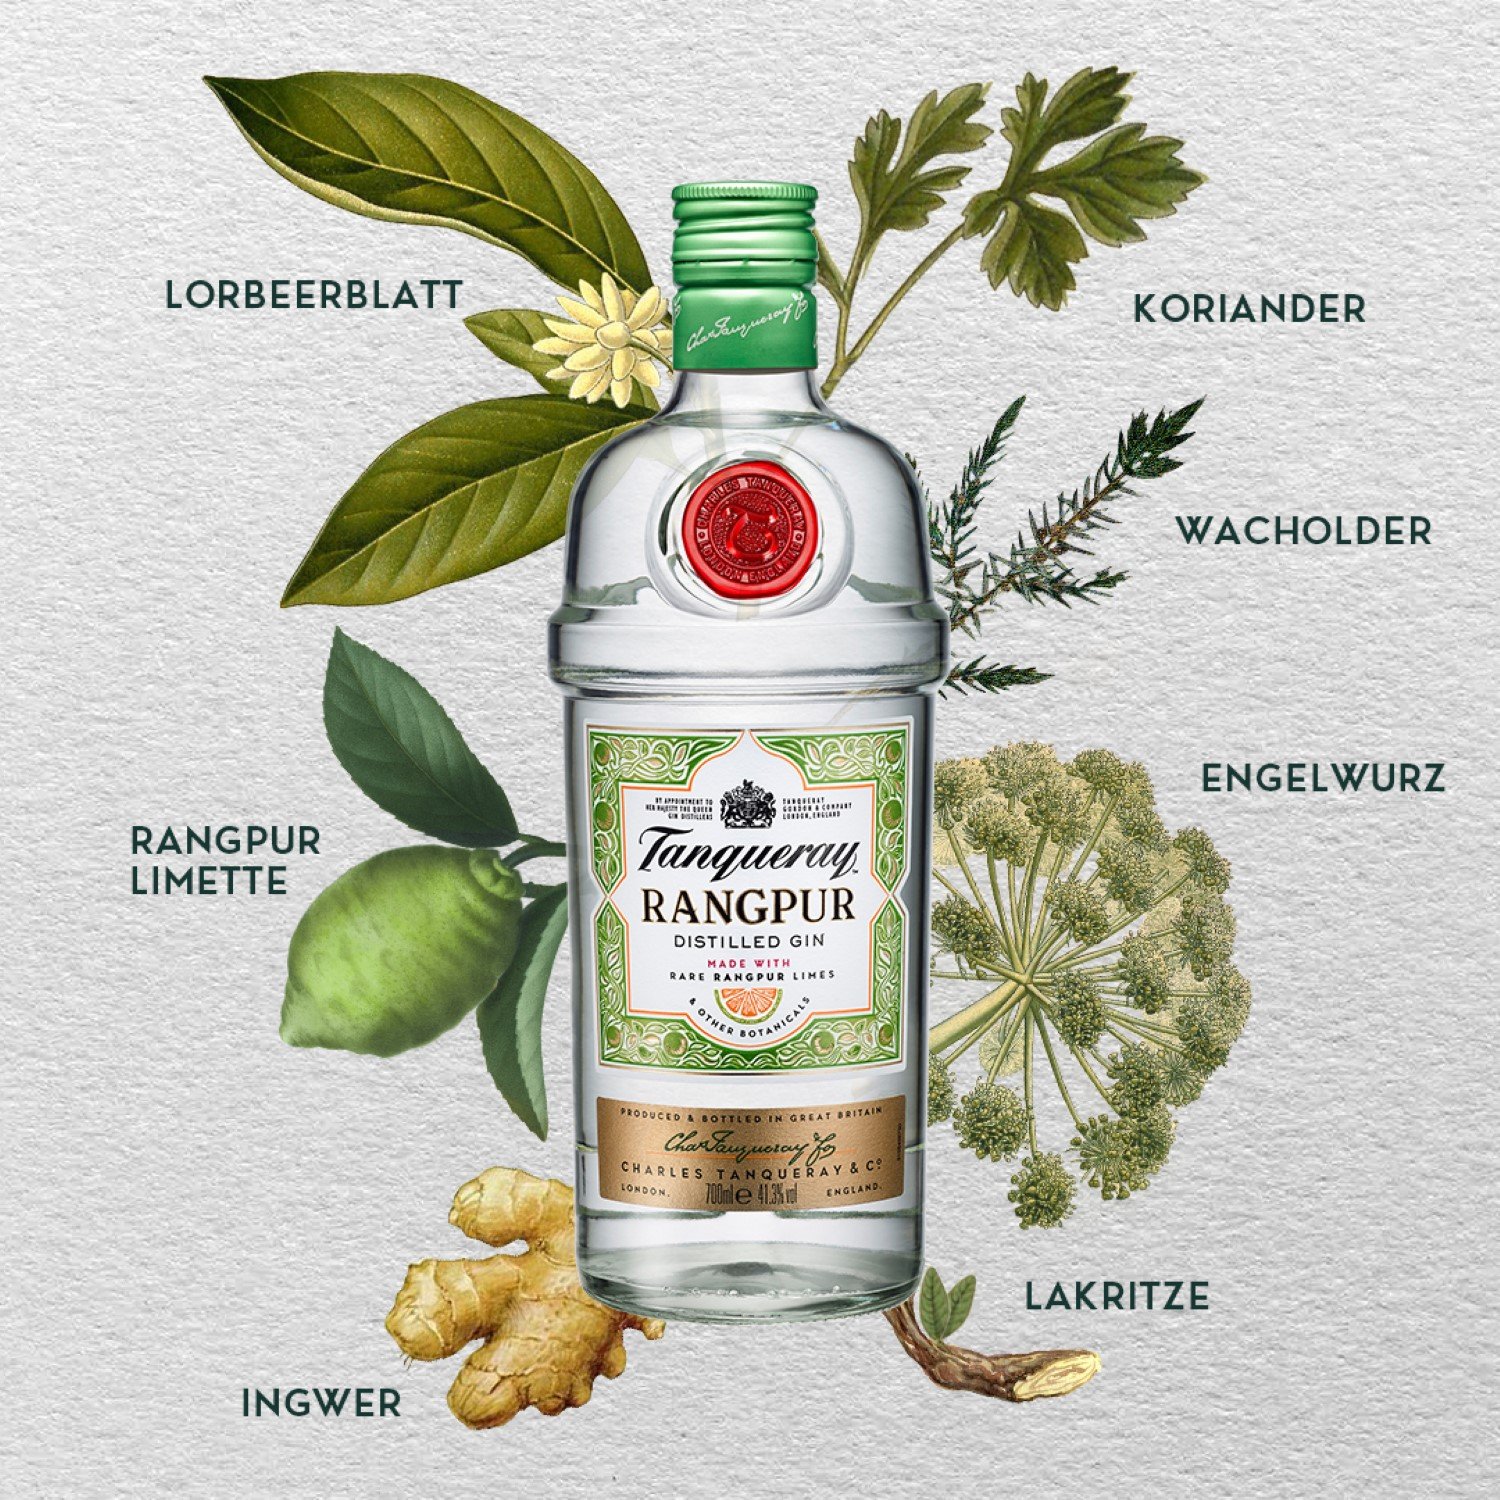 De Tanqueray Rangpur Distilled Gin hoort zeker bij de bestverkochte gins ter wereld.